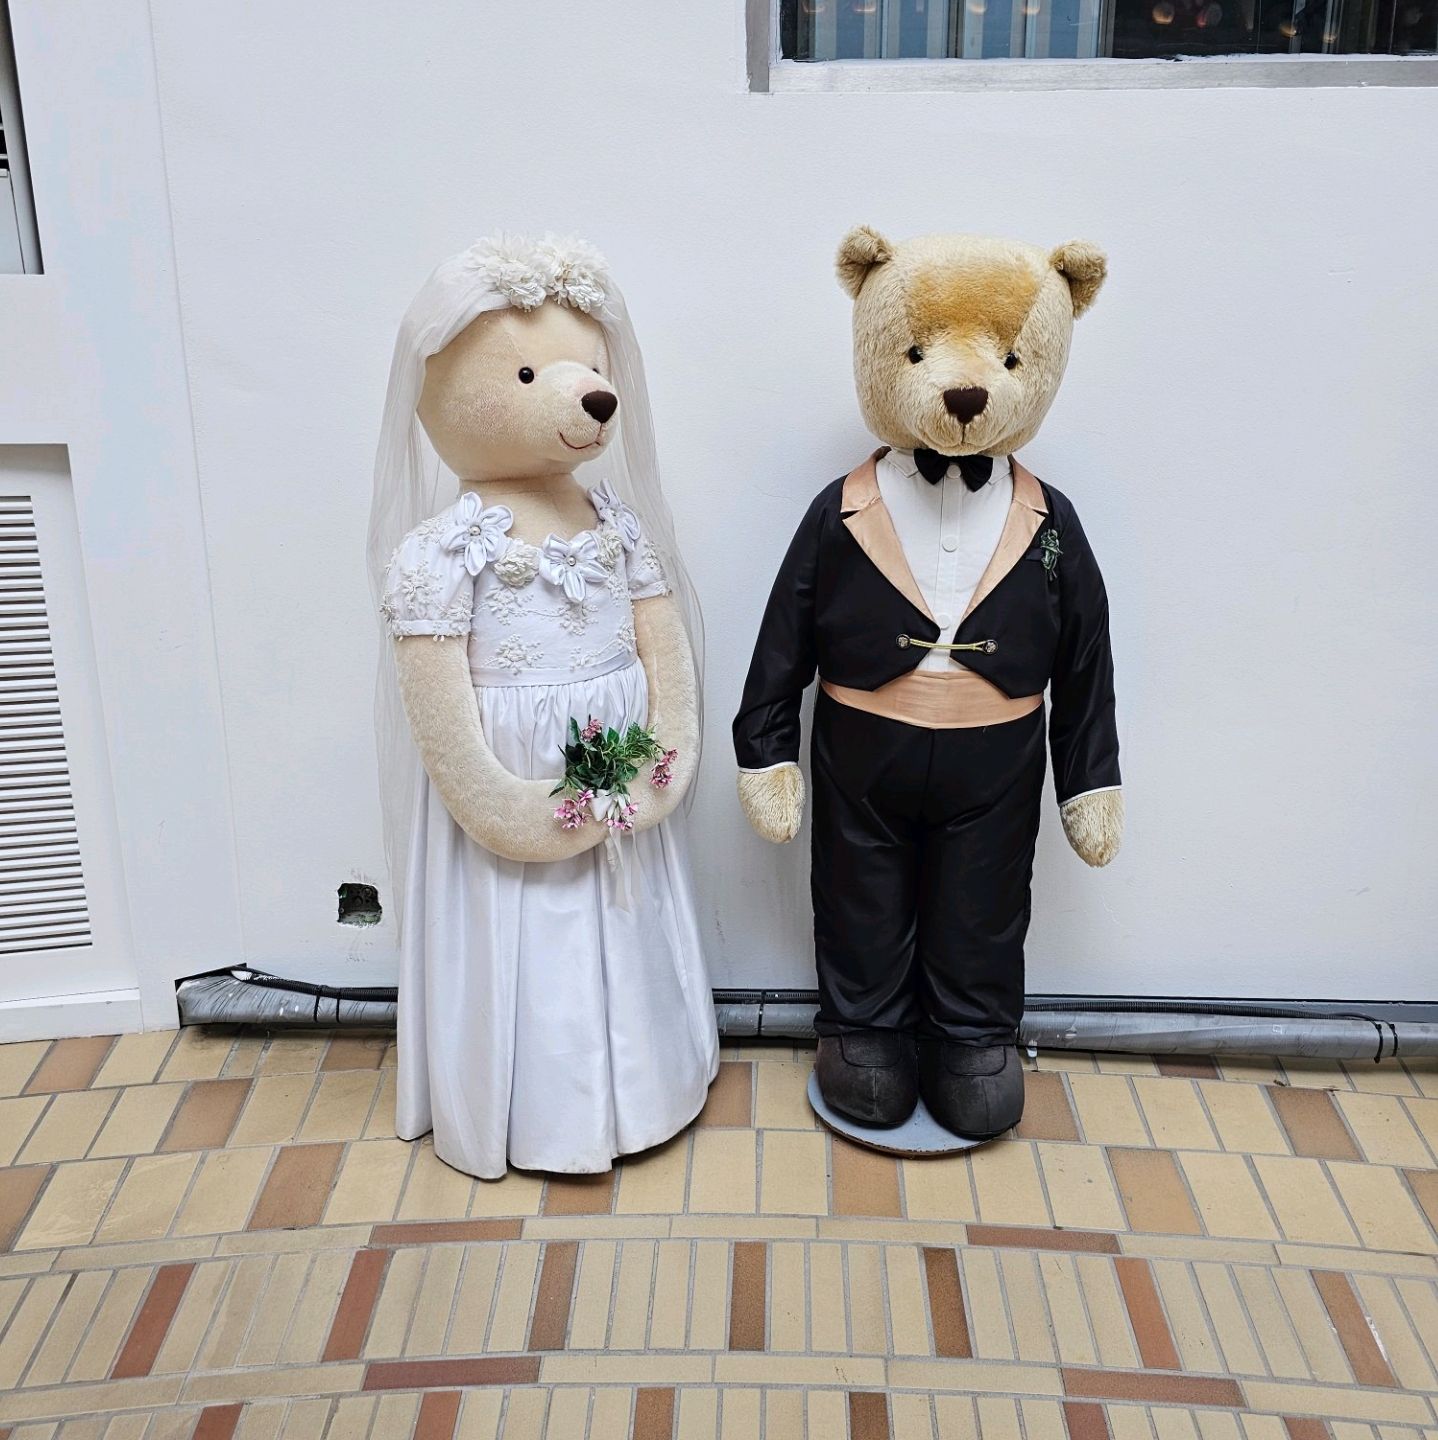 Momorange Lifestyle: Travel Blog: South Korea Trip 2014 Day 2 - Teddy Bear  Museum, 韩国之旅第二天 - 泰迪熊博物馆, 10 Feb 14